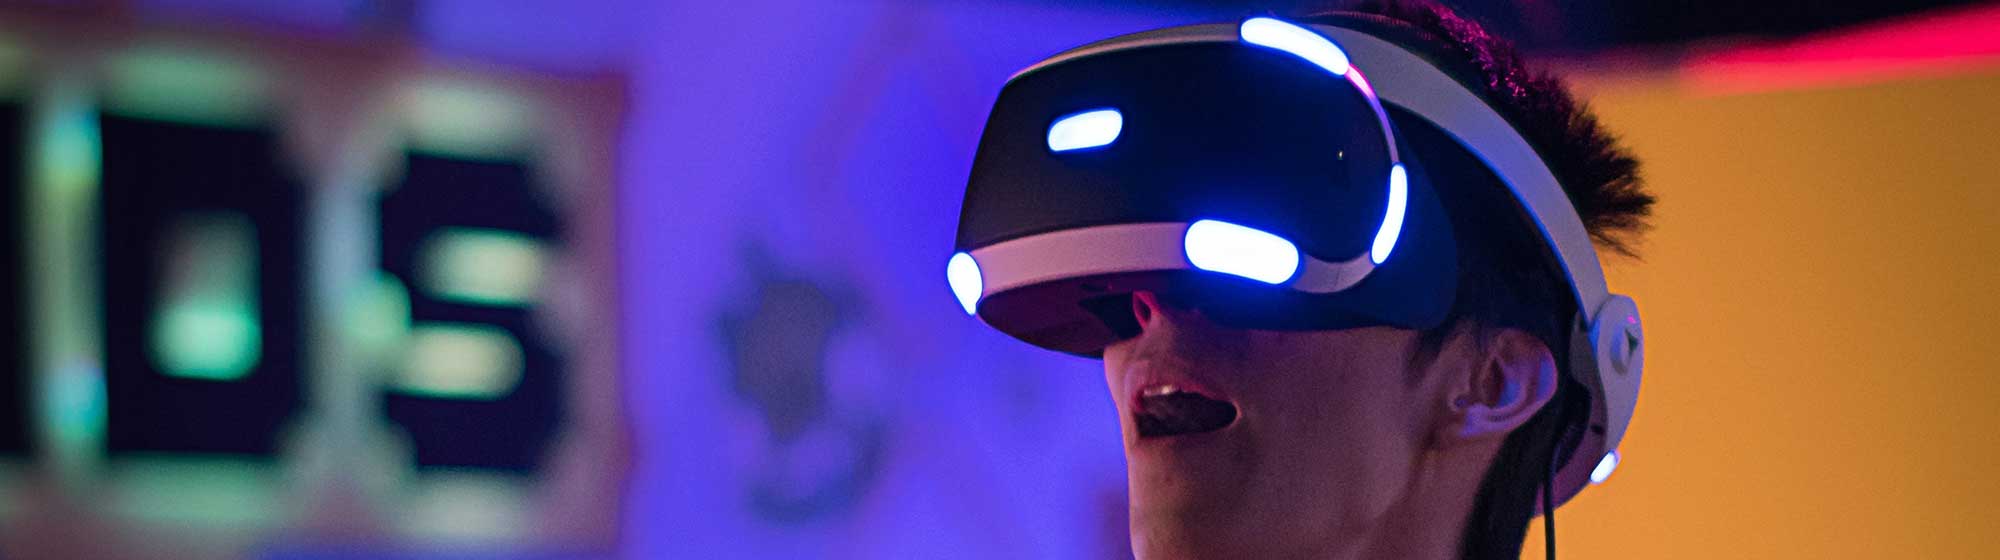 Man in virtual reality helmet simalutation